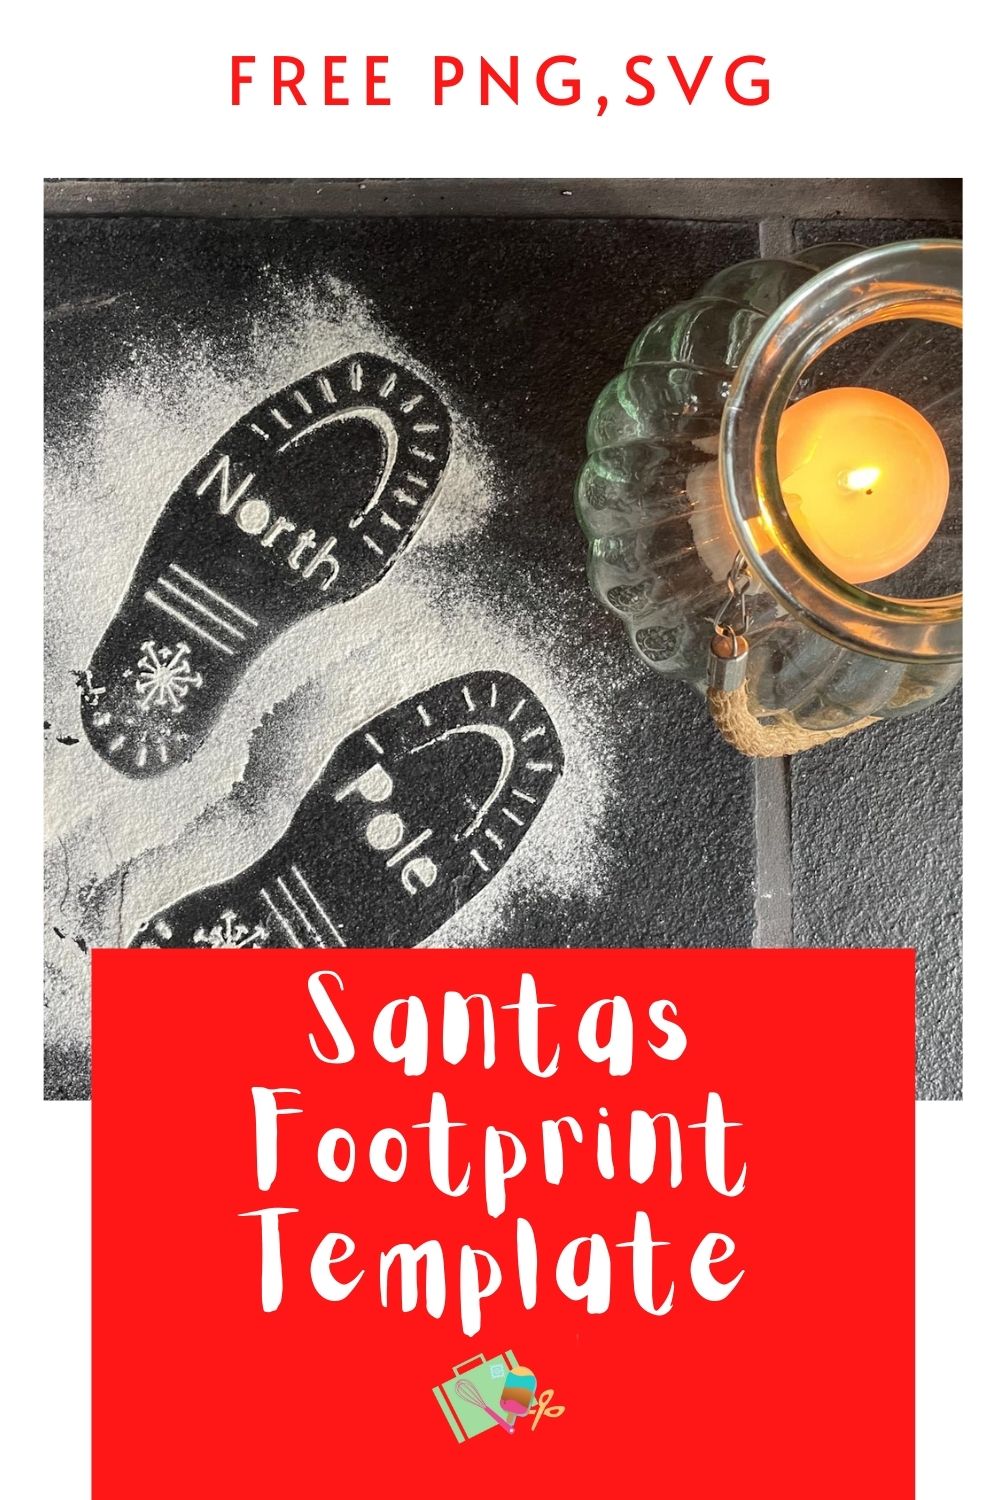 Free Santas Footprint Template for creating Santas Footprints on Christmas Eve